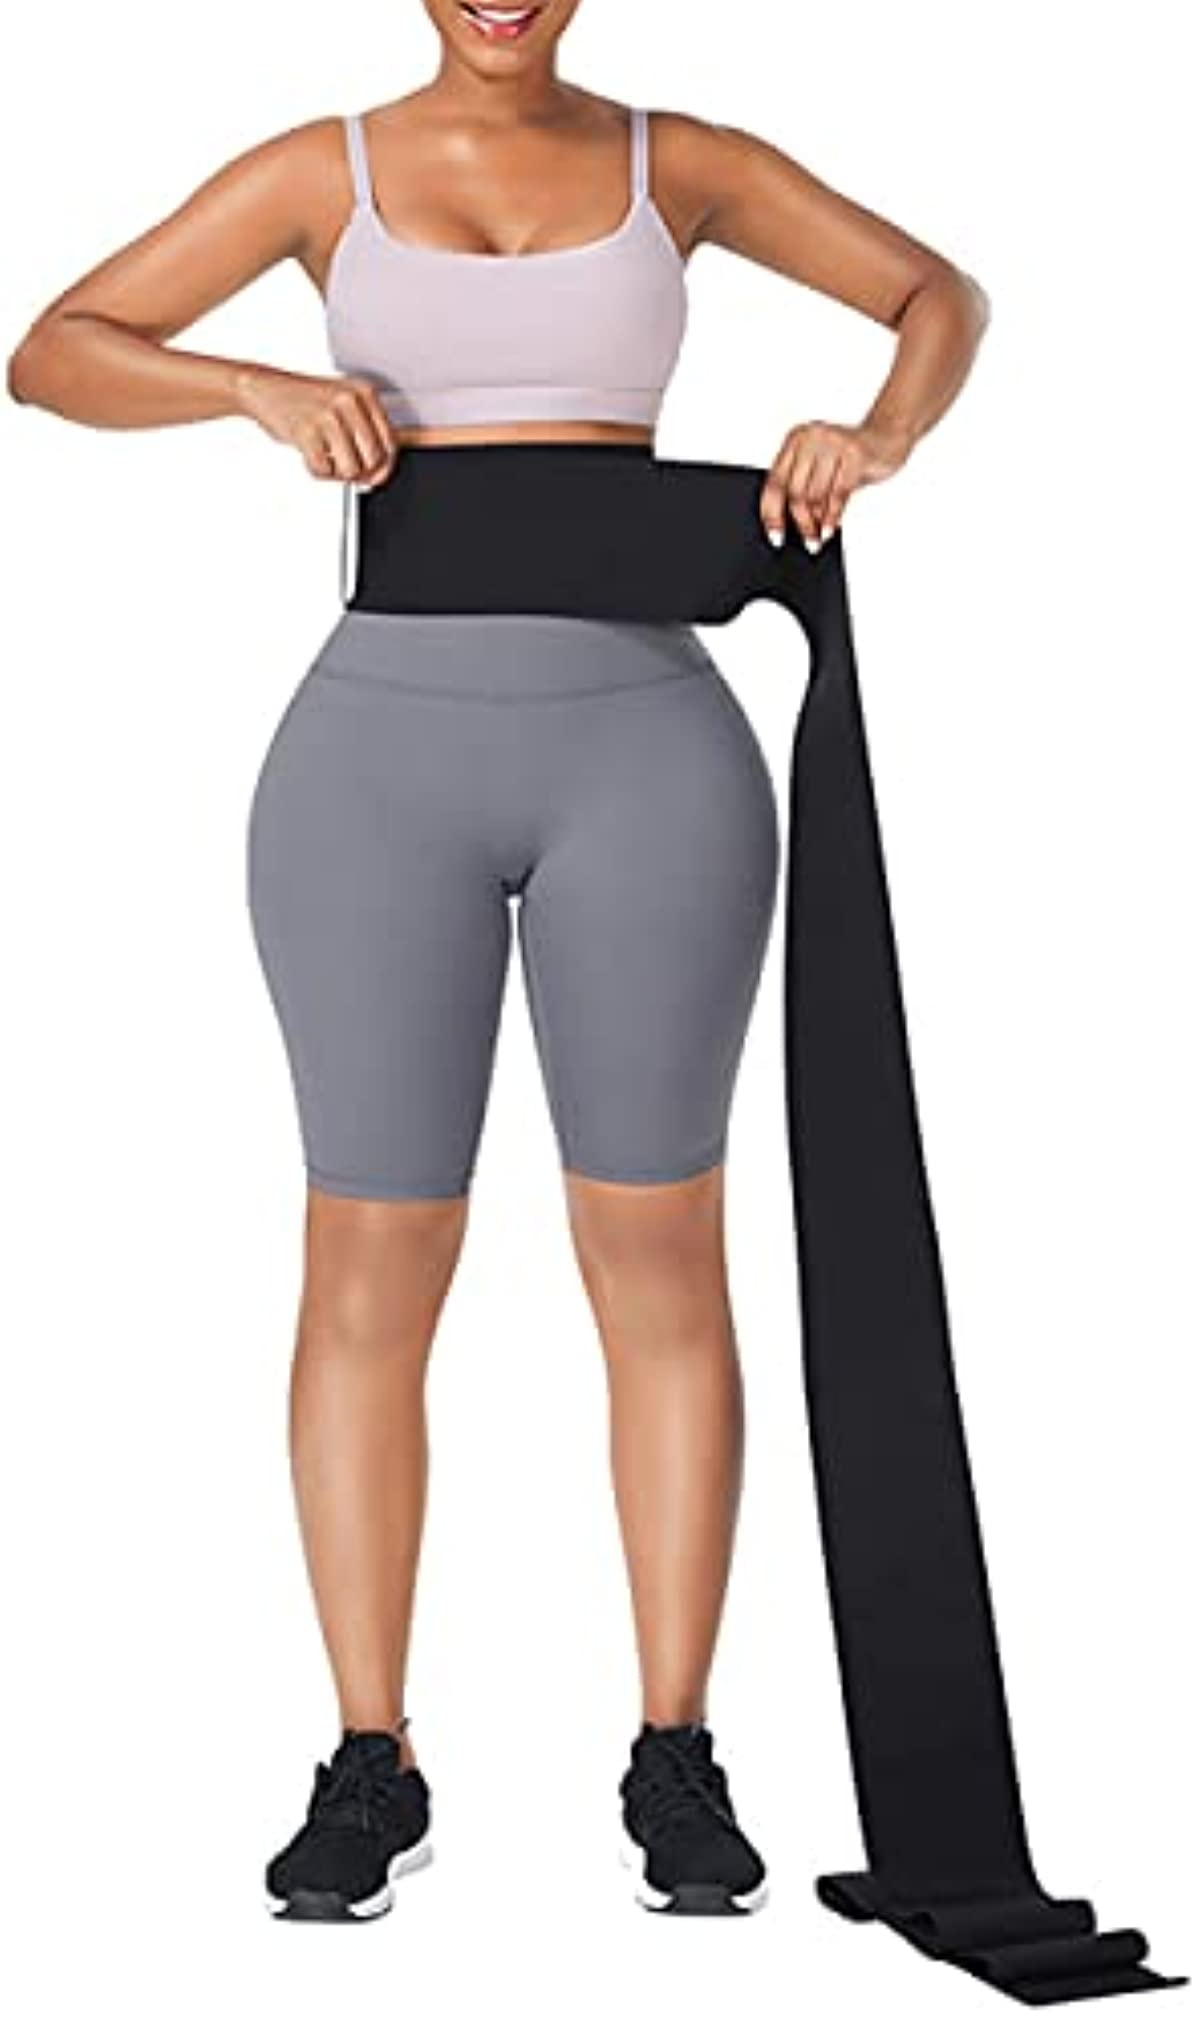 Waist Trainer for women I Adjust Your Snatch Bandage Wrap Tummy Control Waist Trimmer Belt lower belly Compression plus size